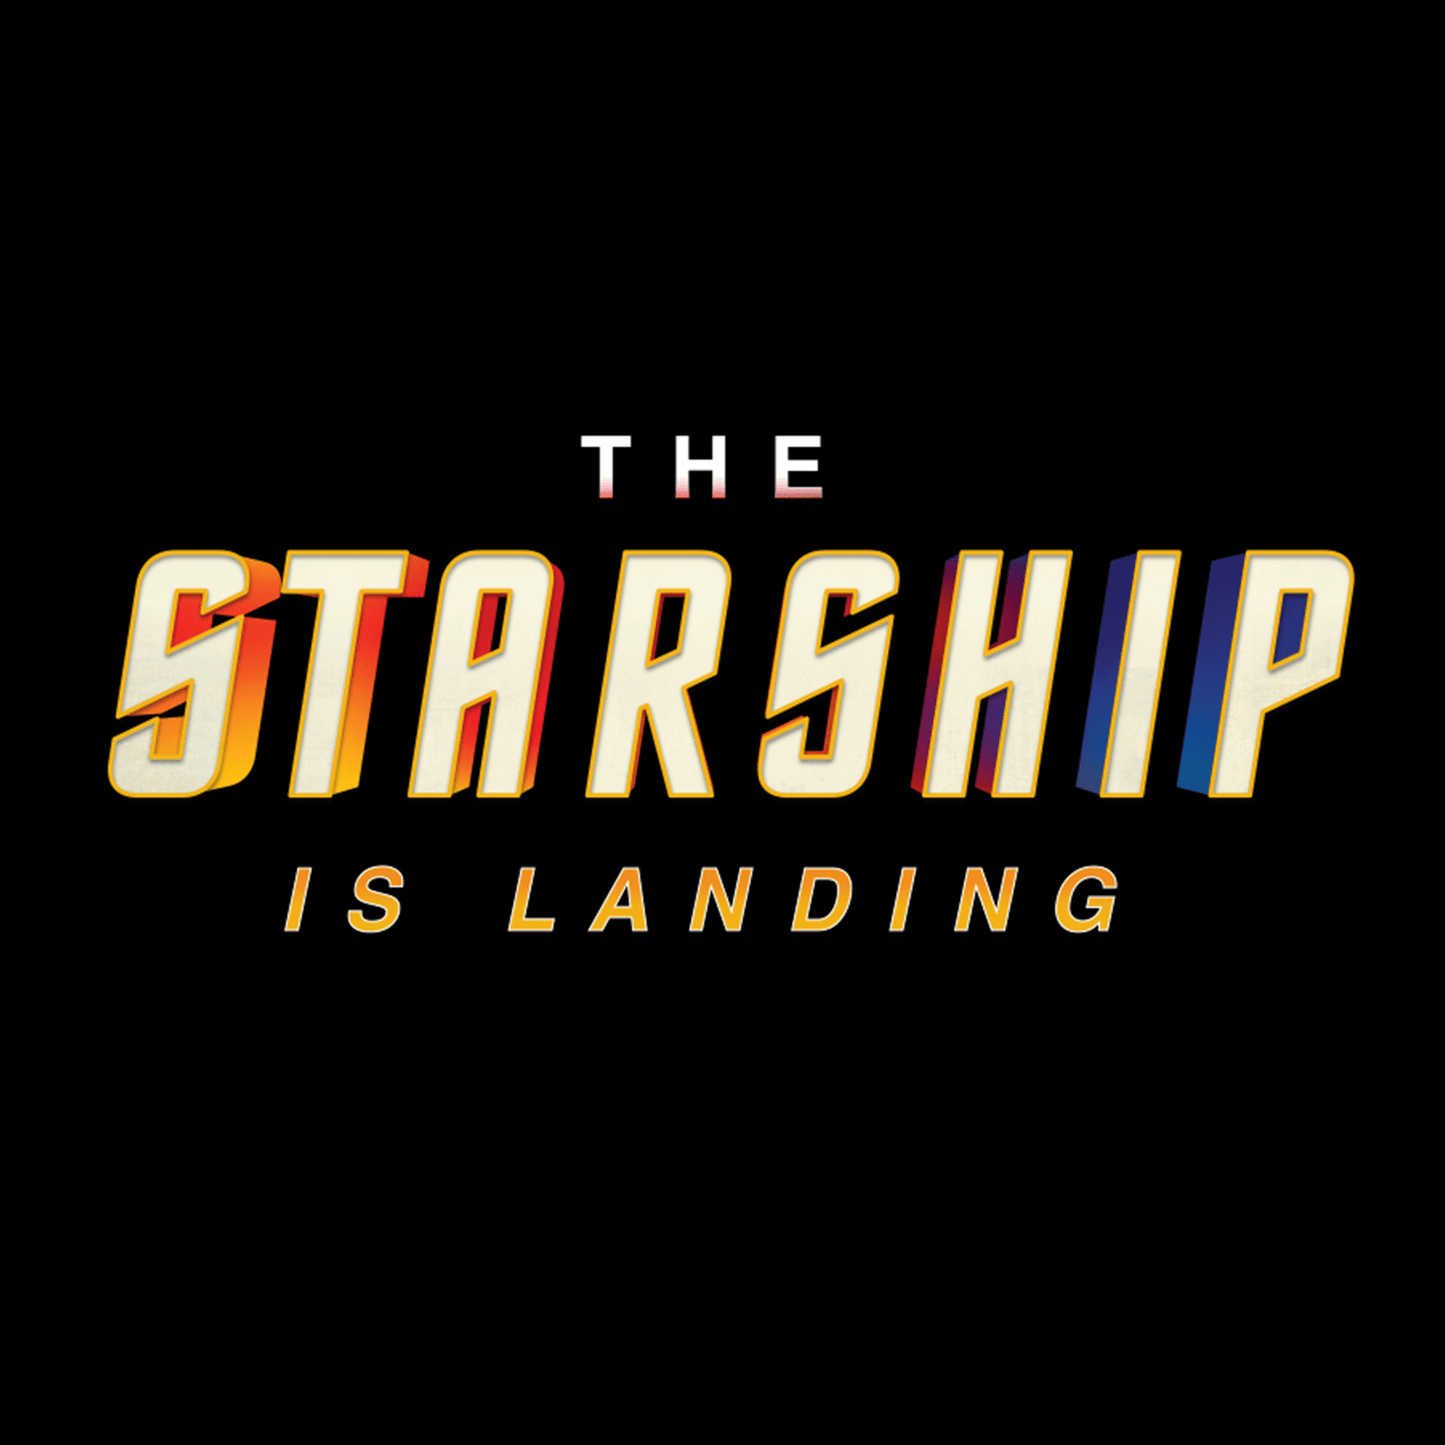 Star Trek The Starship Is Landing Black Mug - Paramount Shop